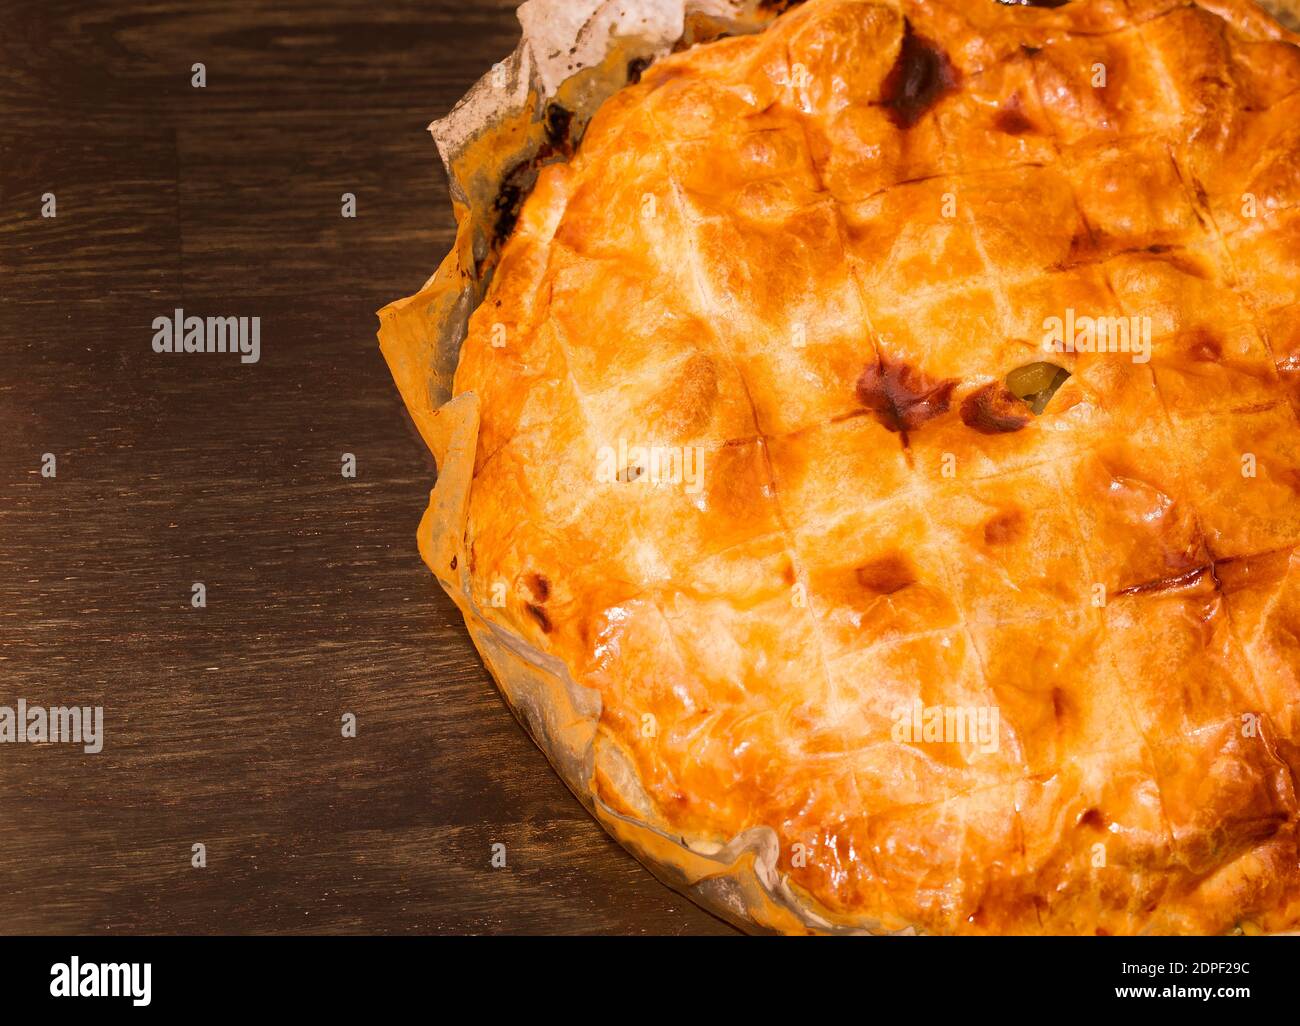 Baked potato pie on a wooden table Stock Photo